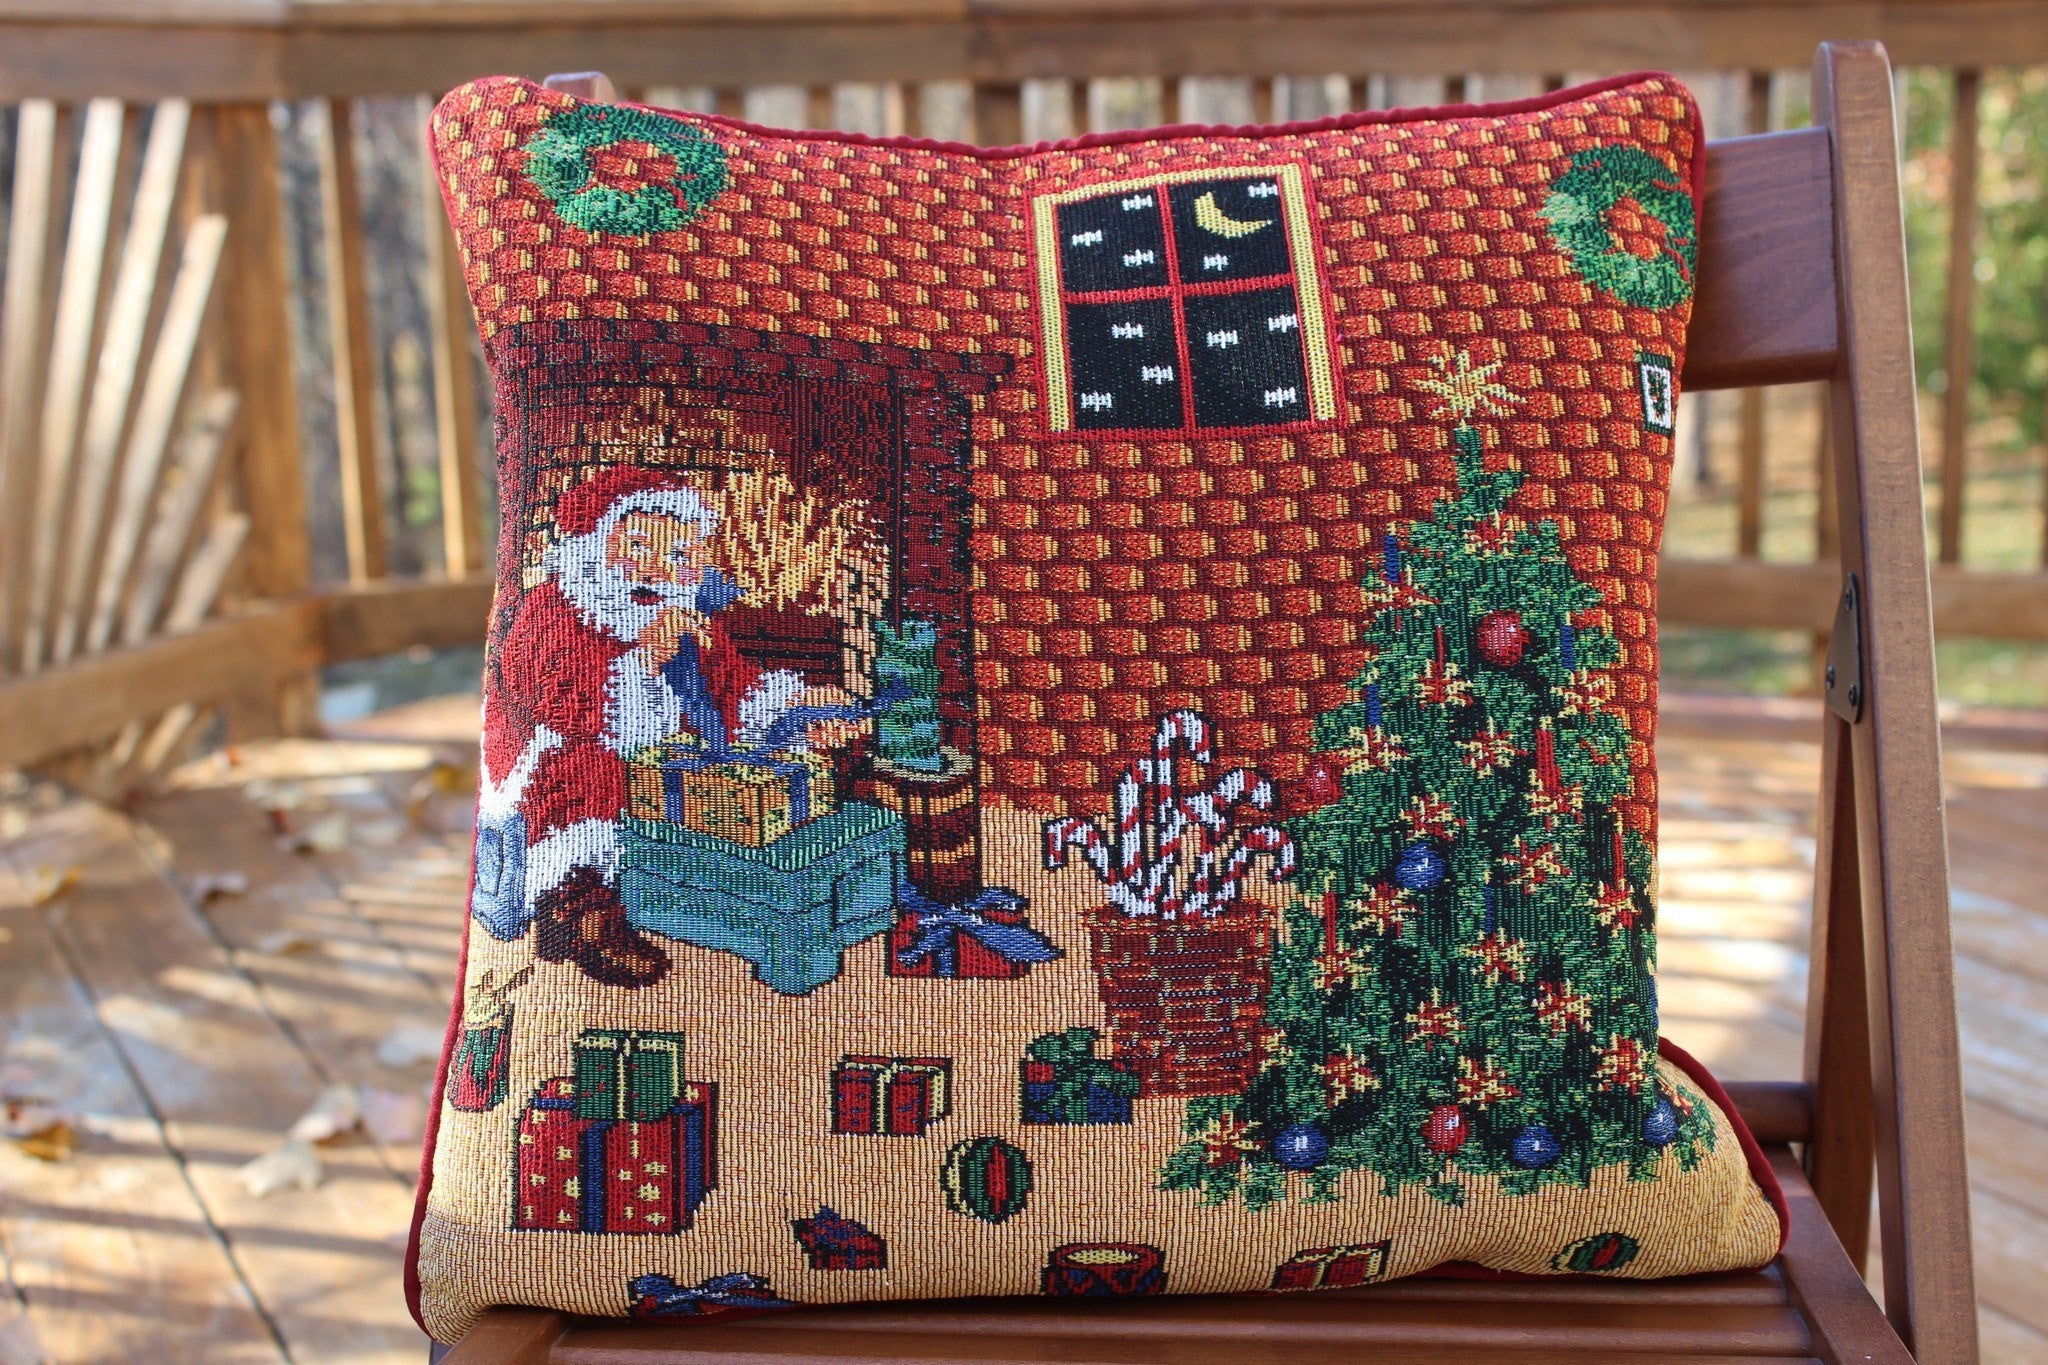 Tache Festive Holiday Last Minute Preparations Cushion Cover (DB11869CC-1616) - Tache Home Fashion